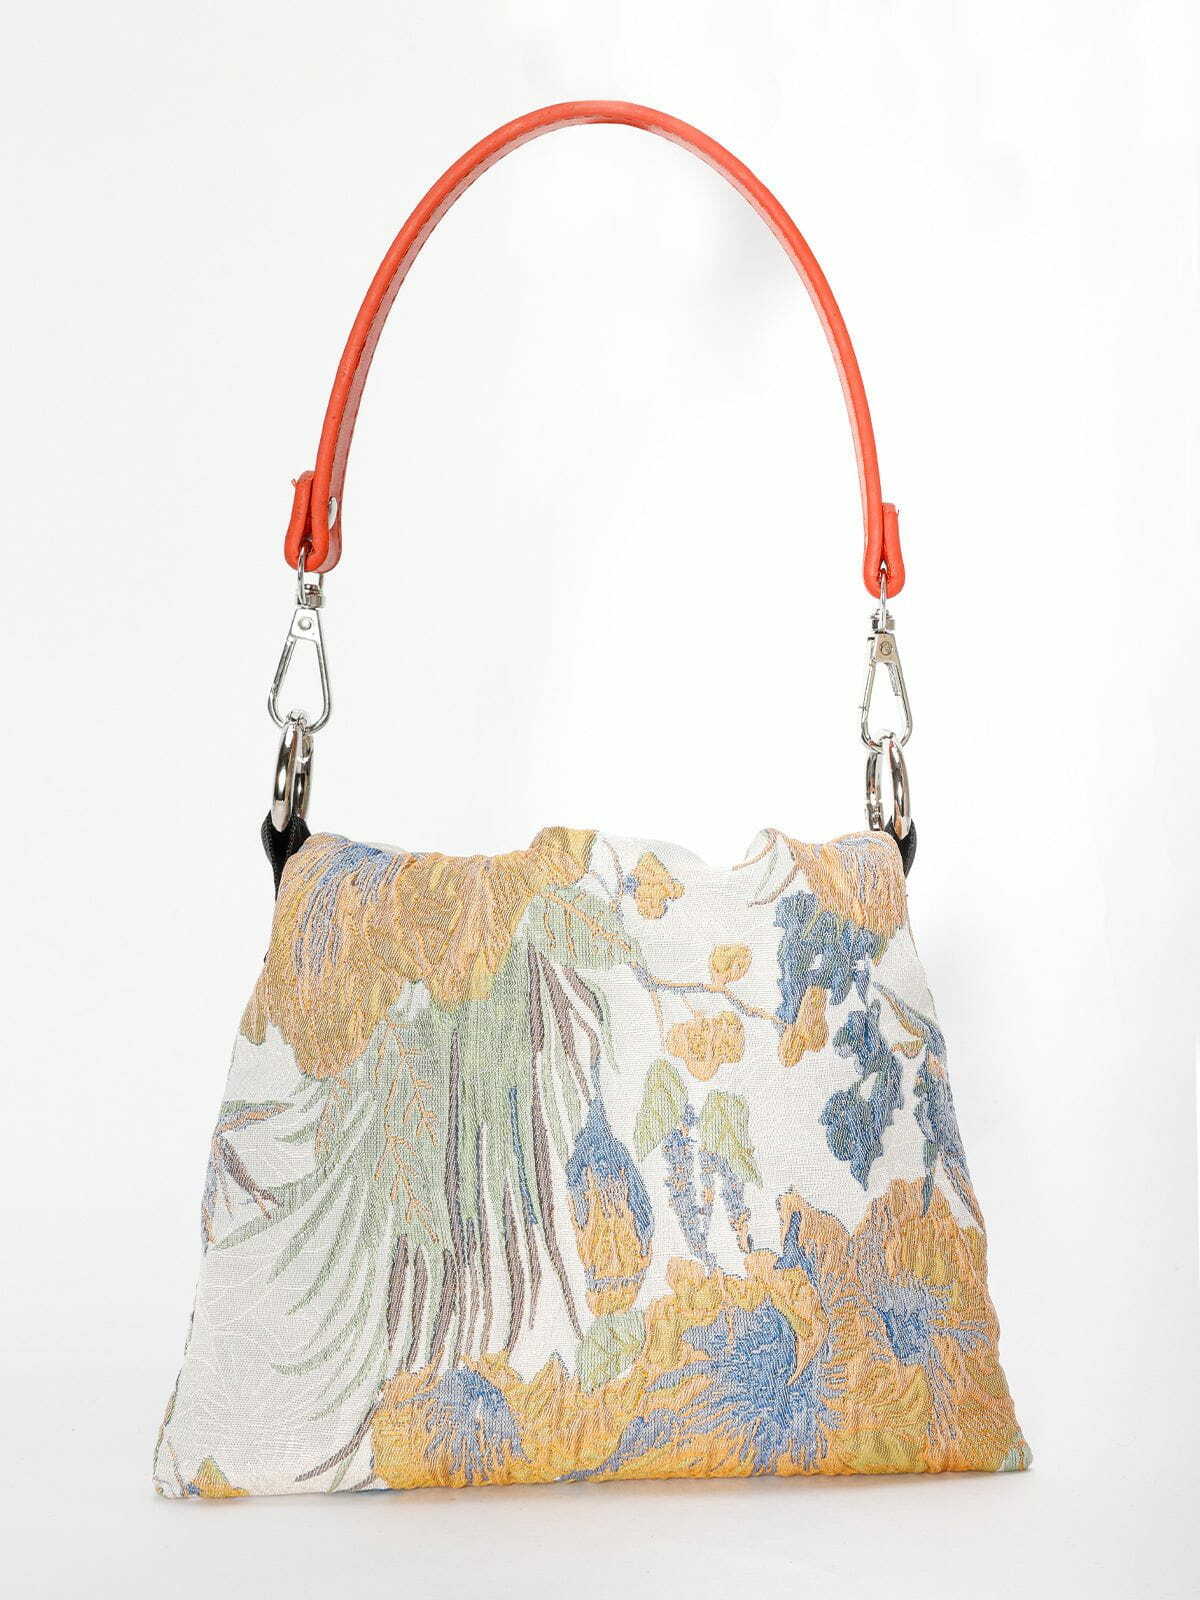 sleek desert sisal plant relief chain bag urban fashion accessory 4407